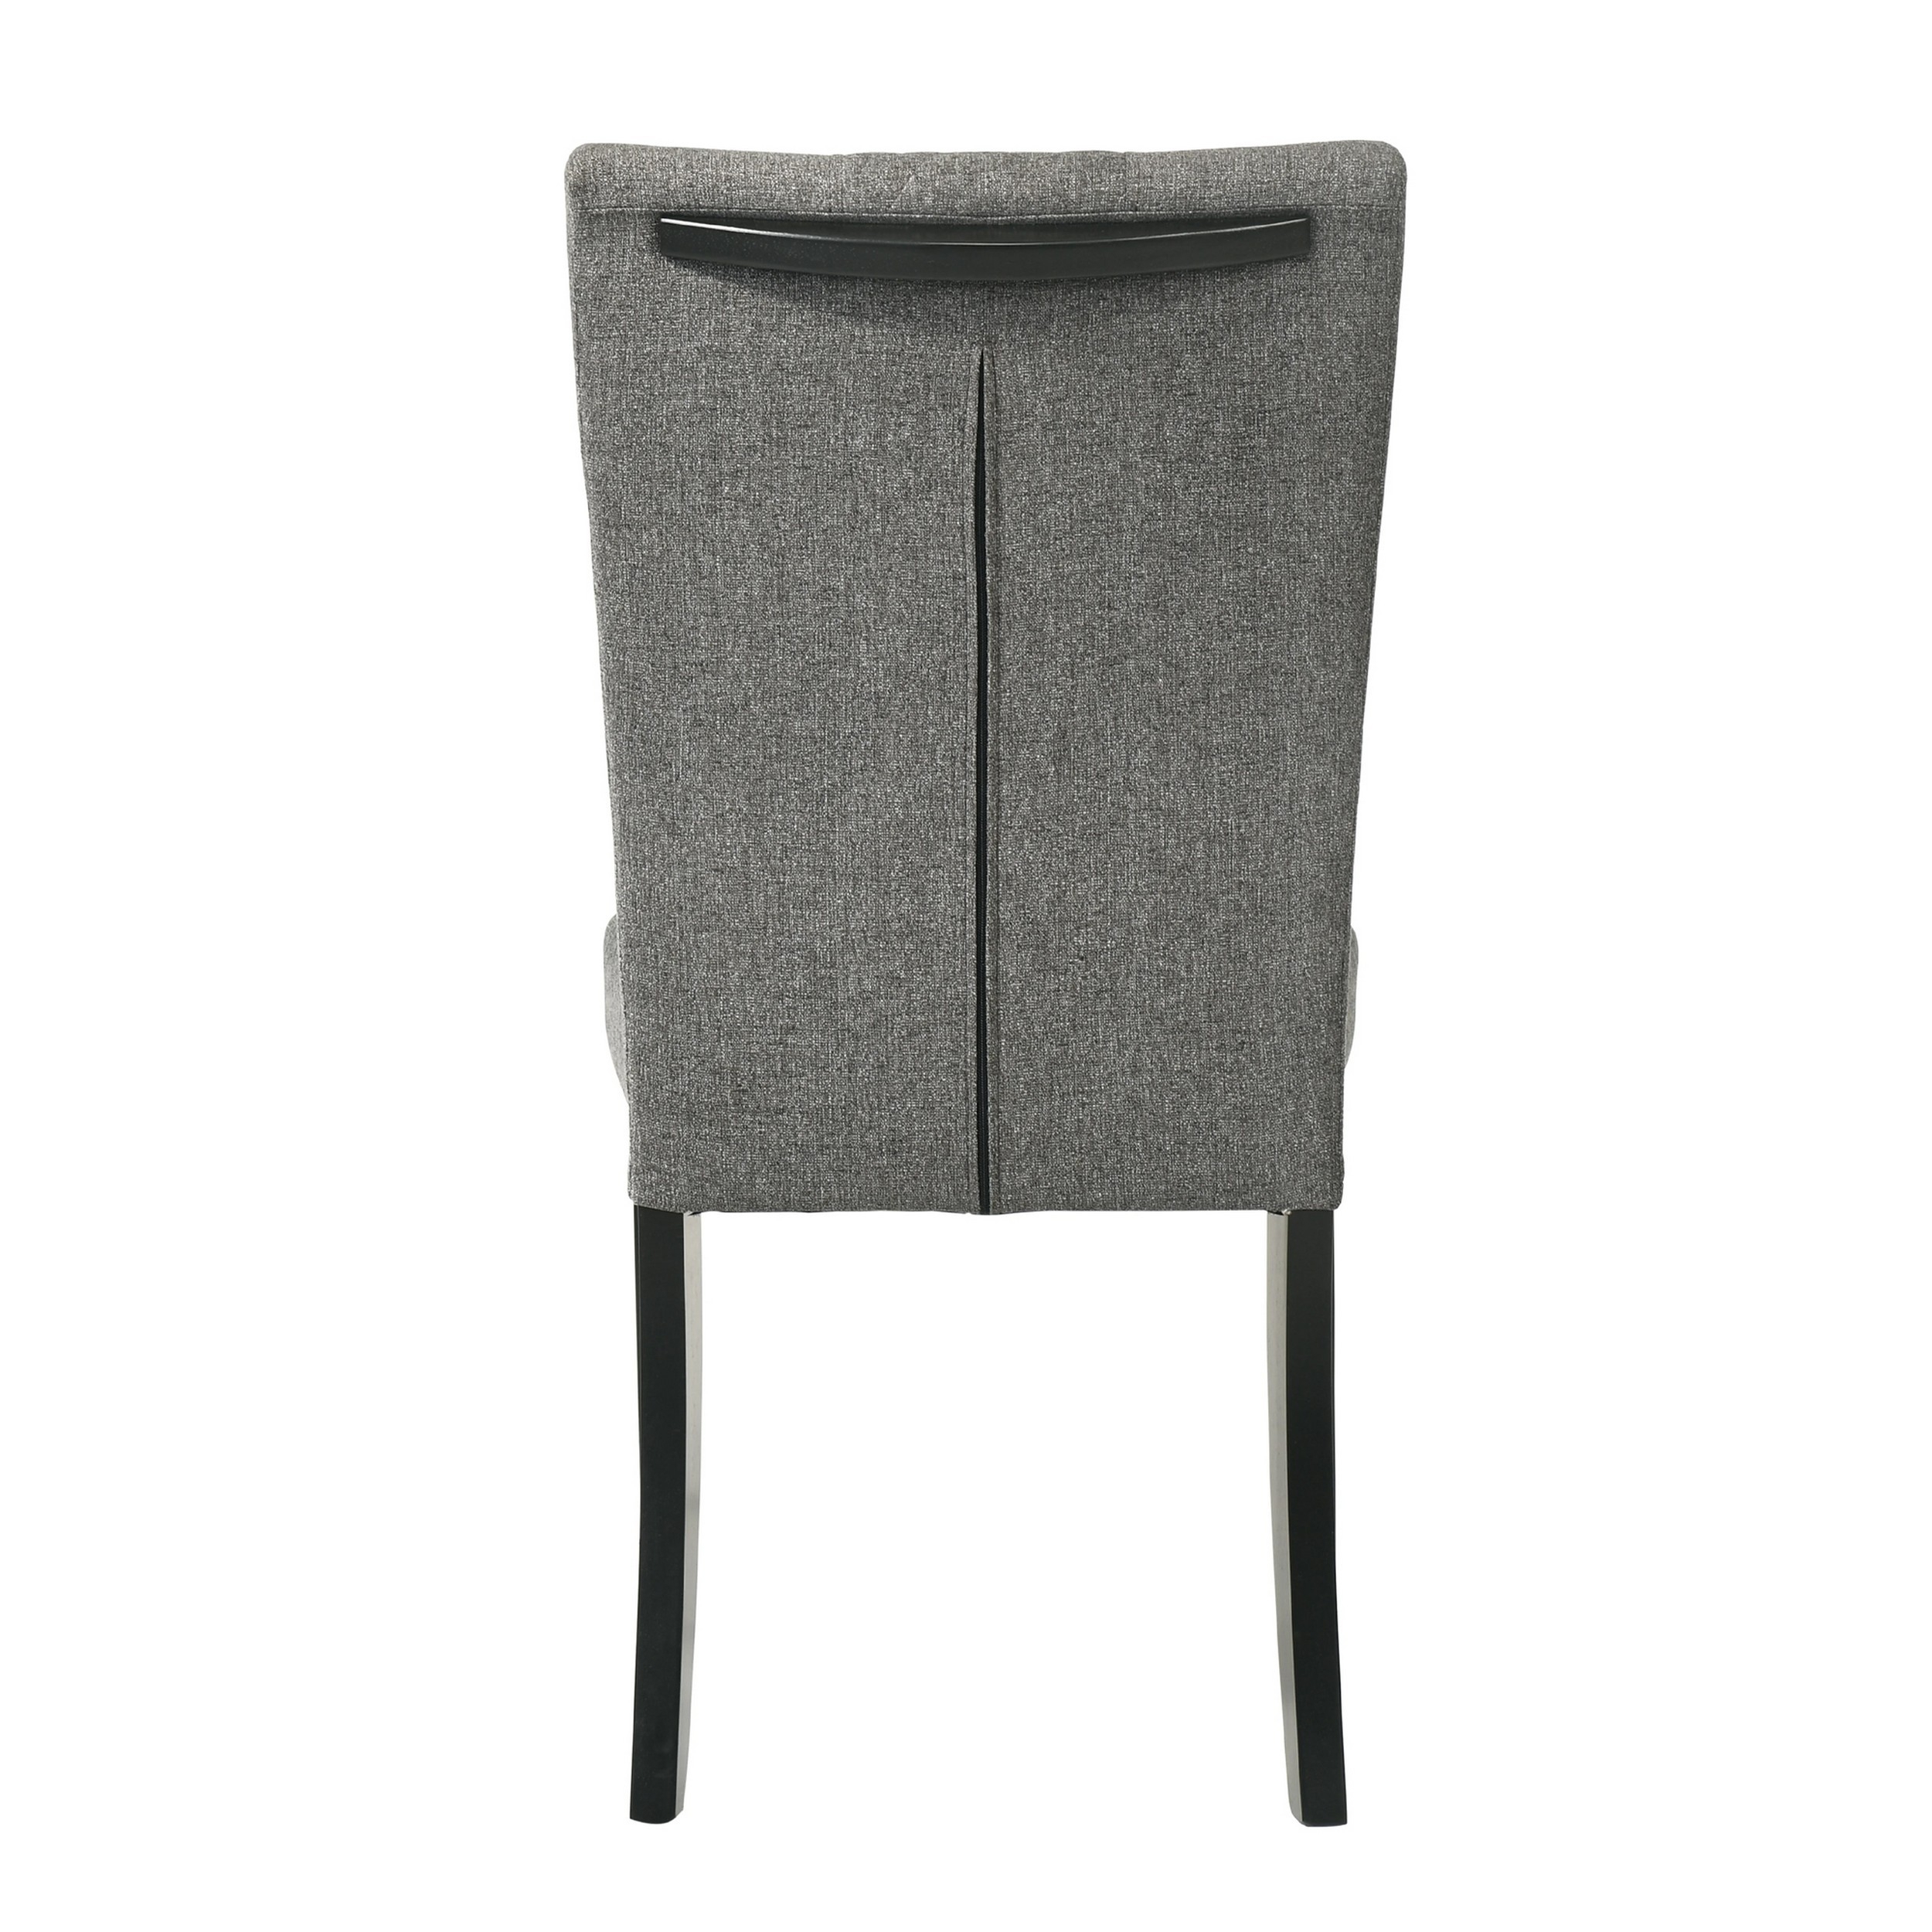 Nicole 26 Inch Side Chair Set Of 2, Wood Frame, Fabric Upholstery, Gray -Saltoro Sherpi